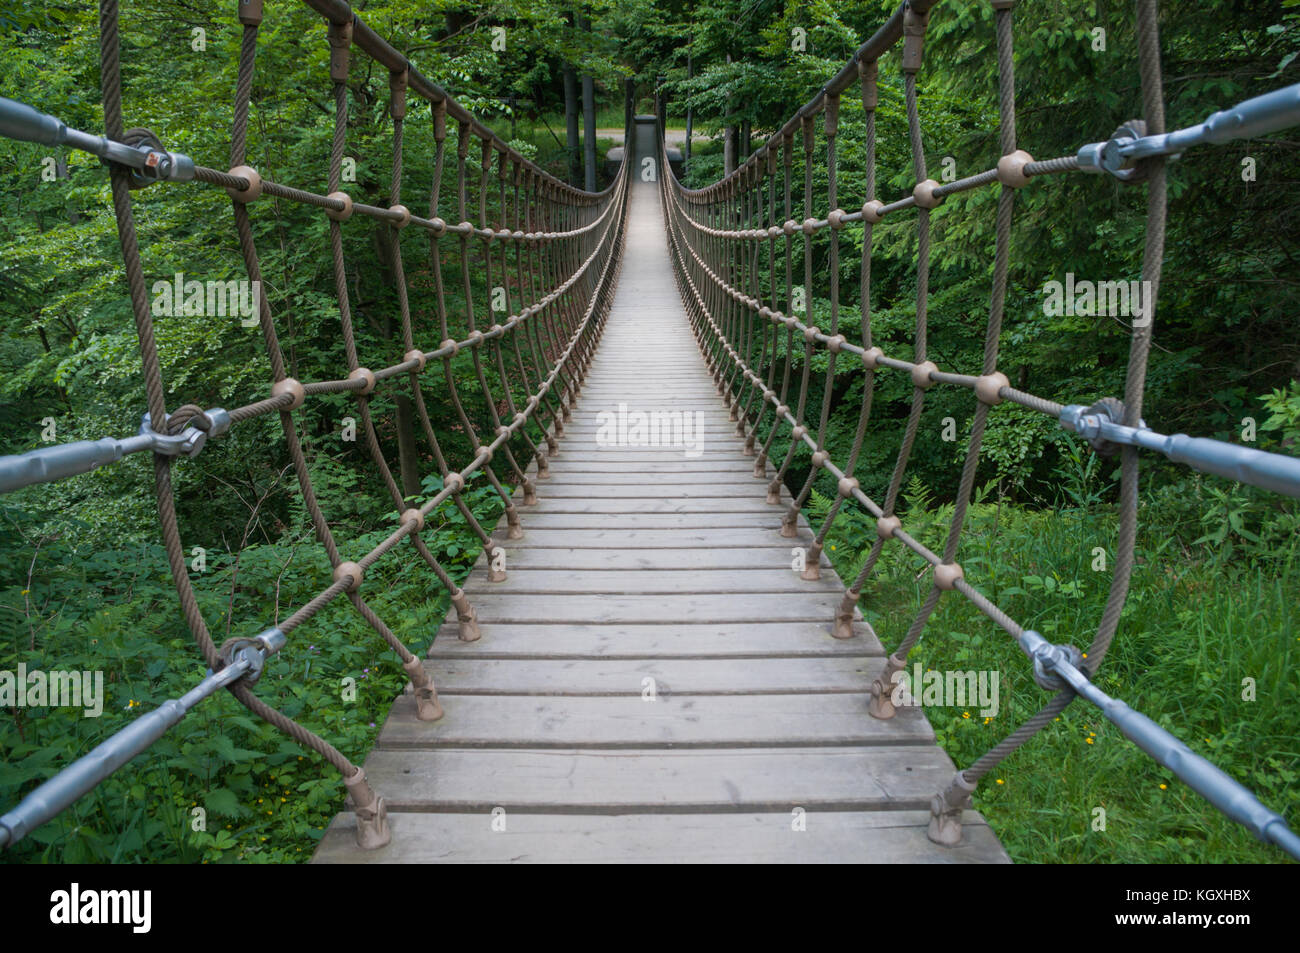 Suspension Bridge Inside A Forest Stock Photo